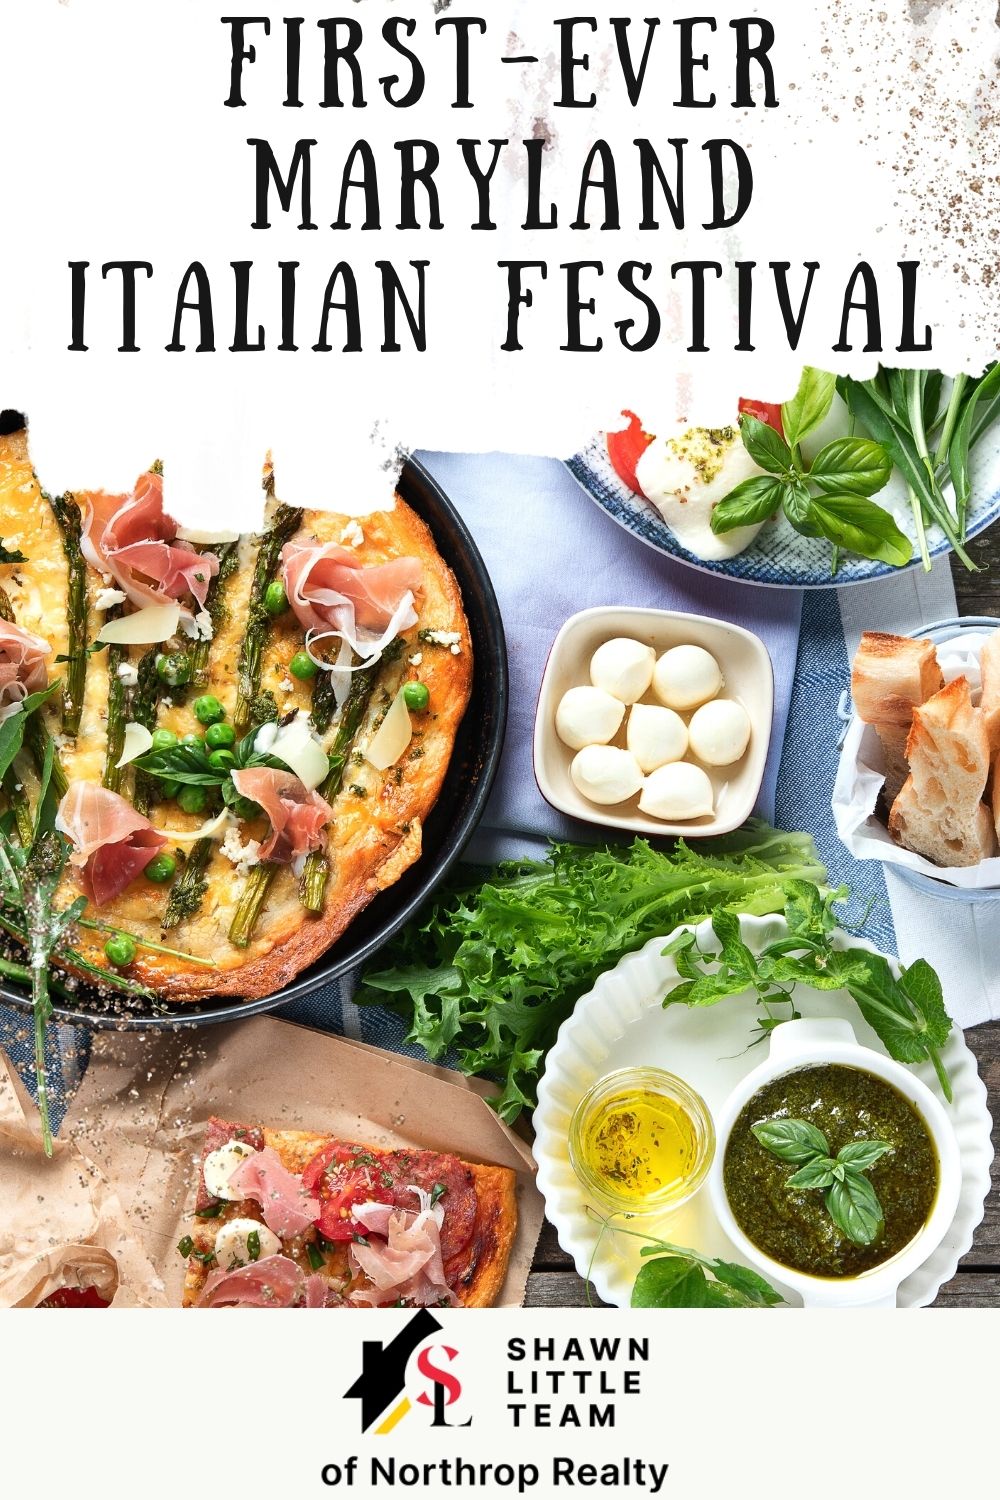 First-ever Maryland Italian Festival